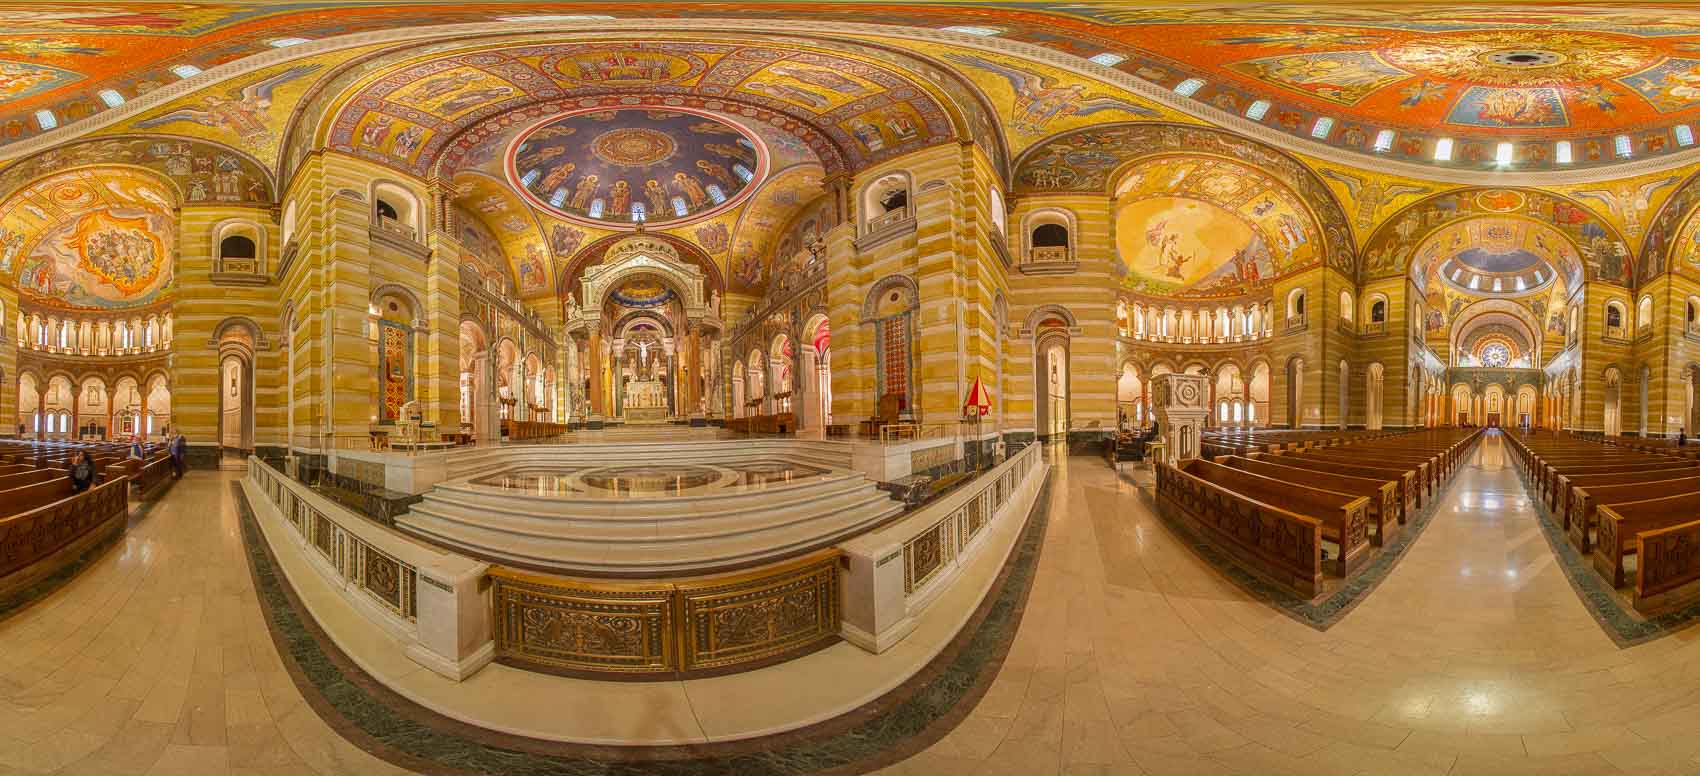 st louis cathedral virtual tour